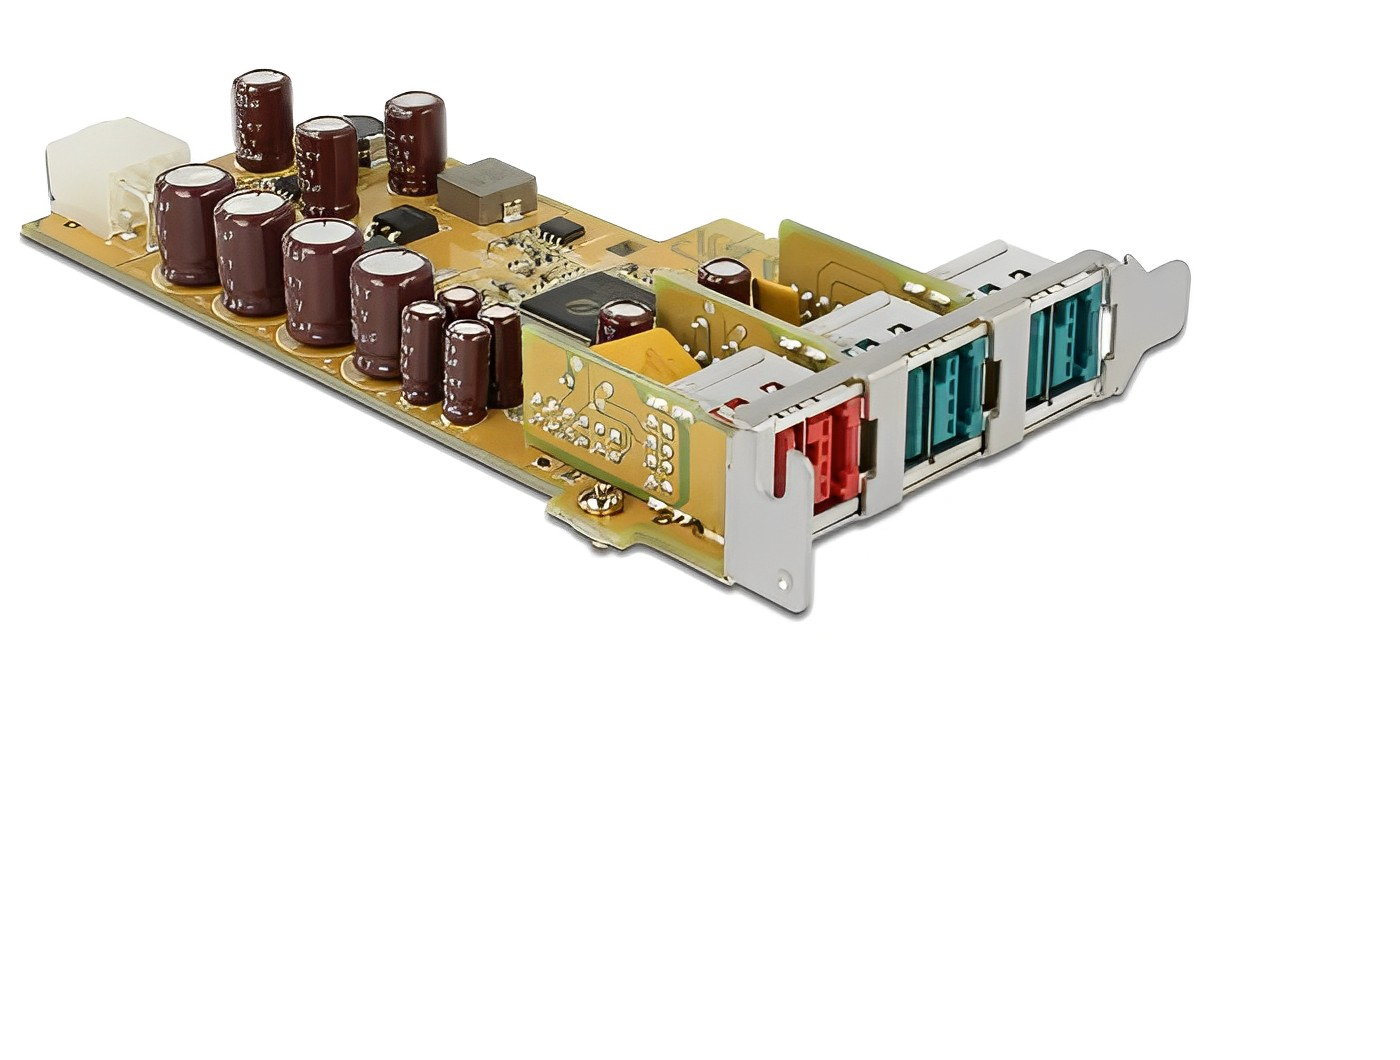 כרטיס PCIe x1 PoweredUSB Low profile עם 3 יציאות USB של 24 או 12 וולט צ'יפ Pericom - delock.israel